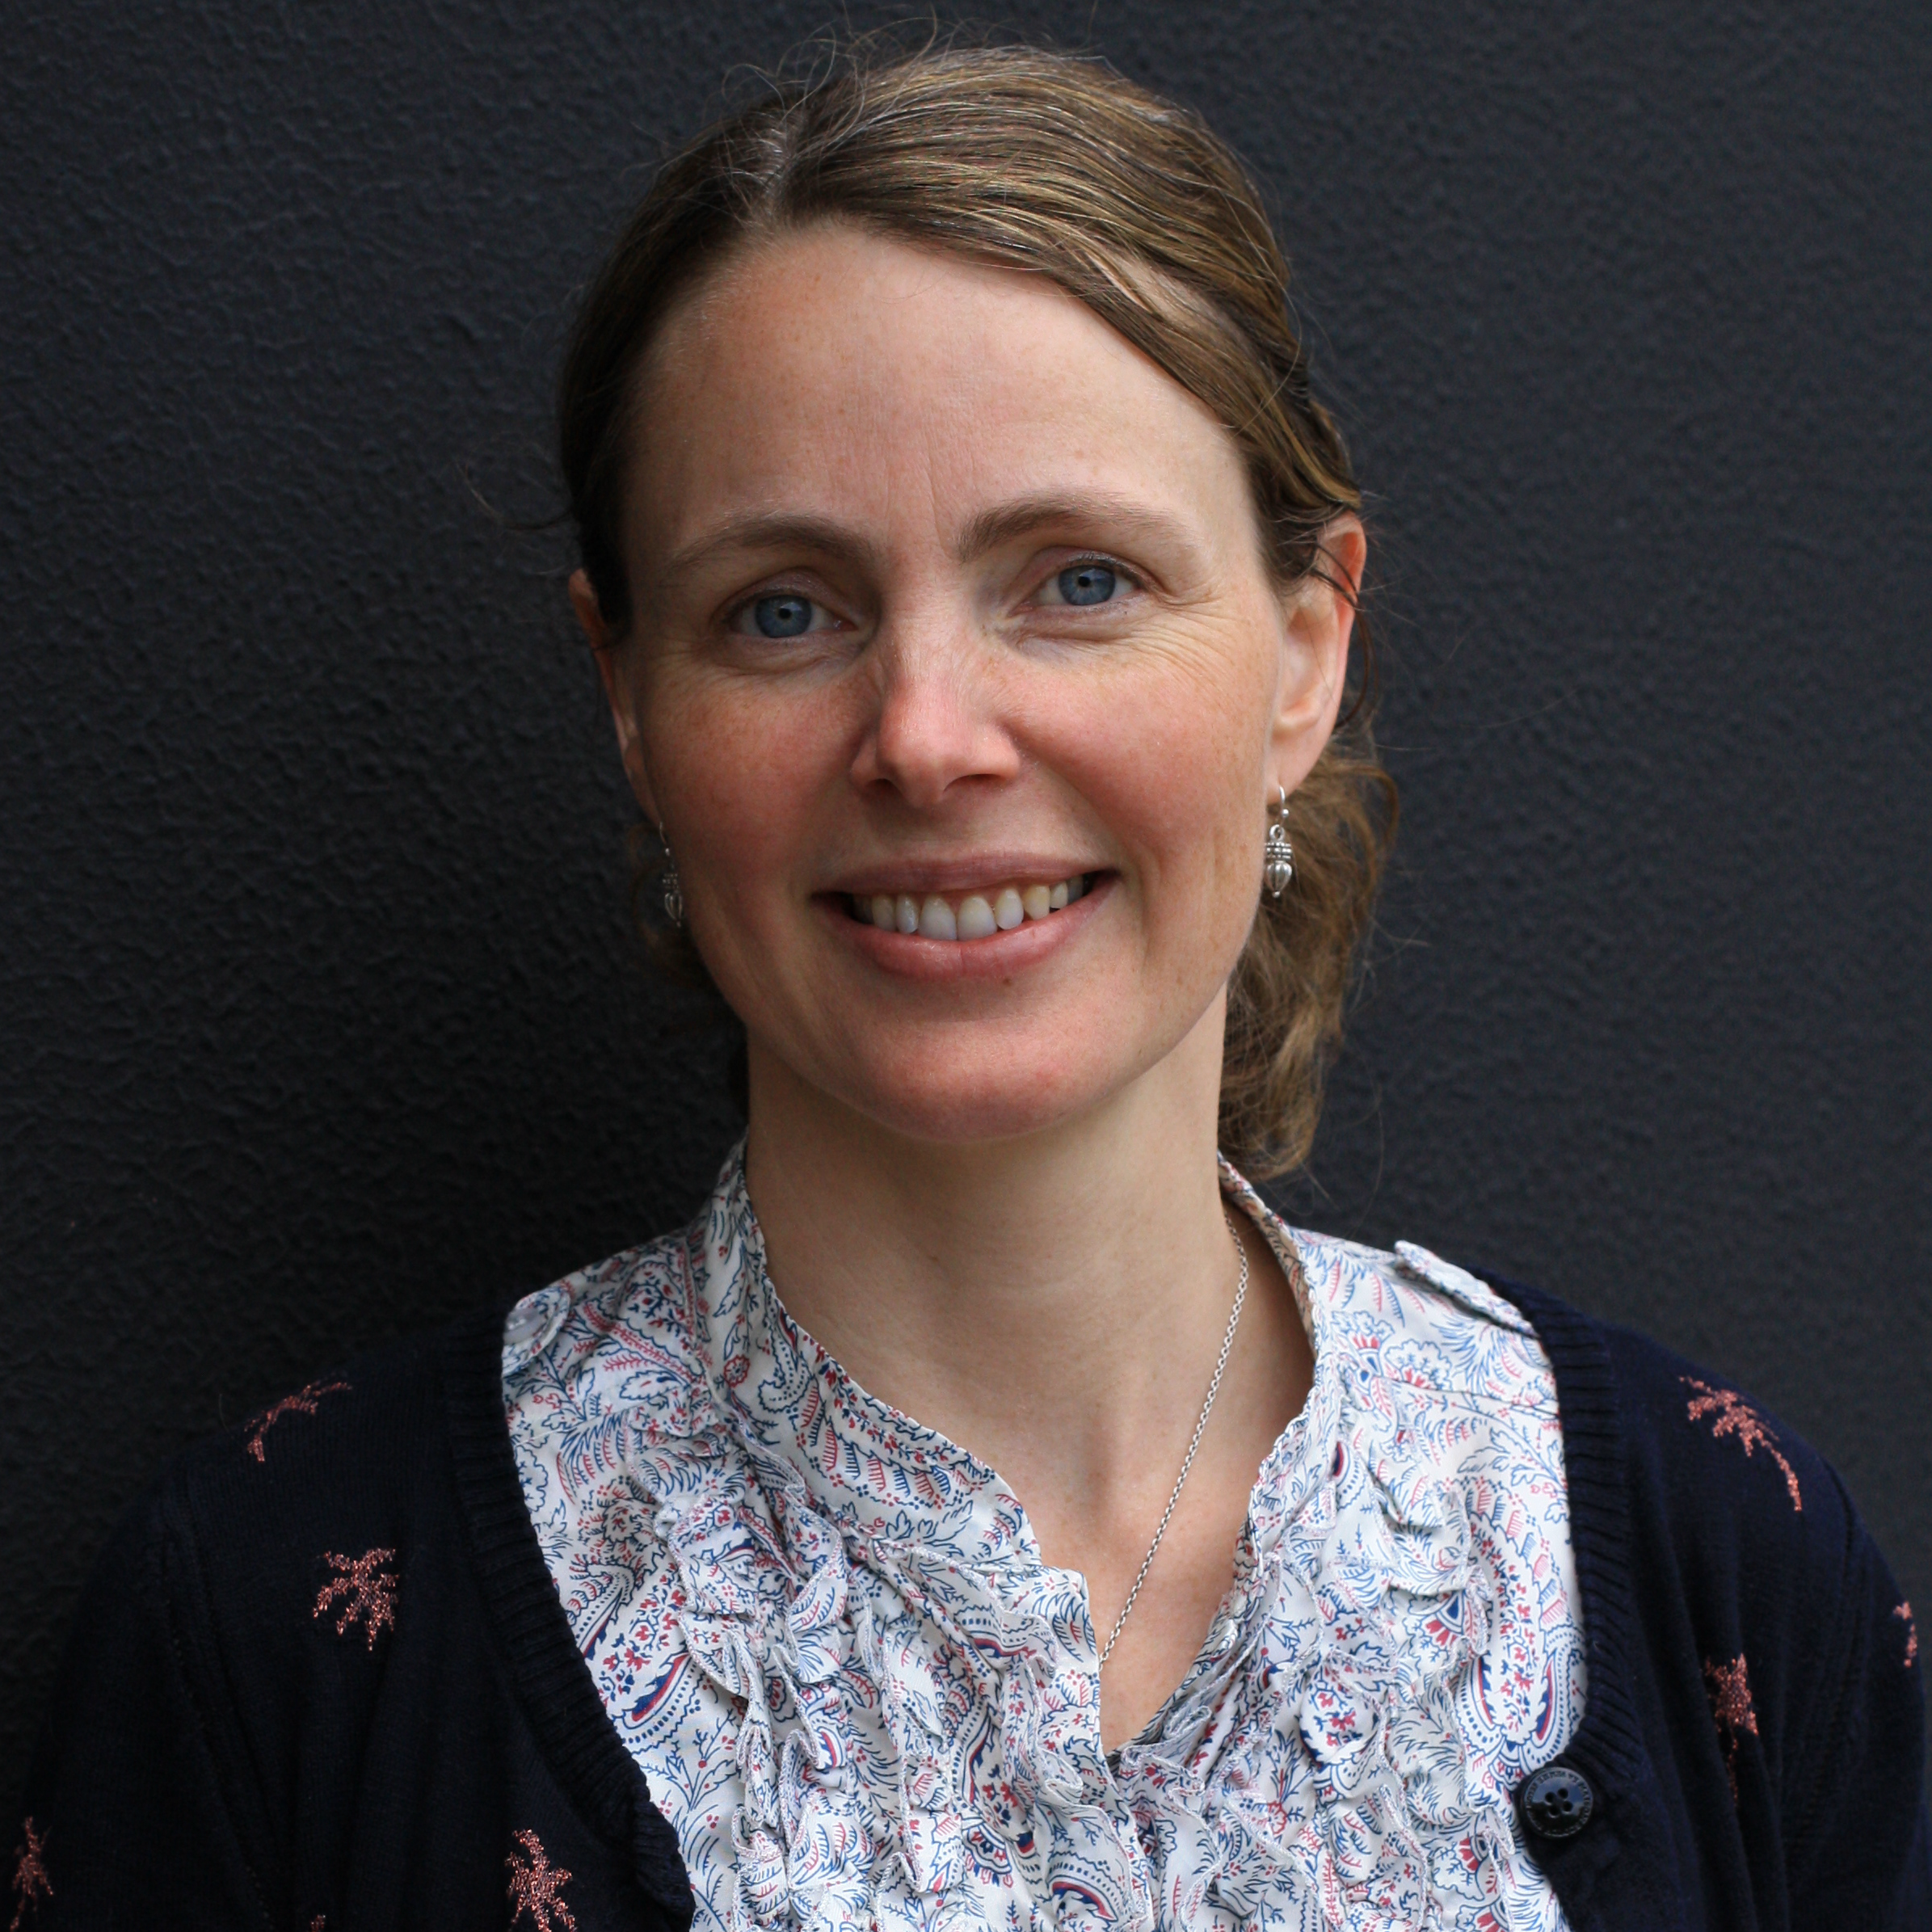 Sara Ljungblad, senior lecturer at Chalmers University of Technology and University of Gothenburg